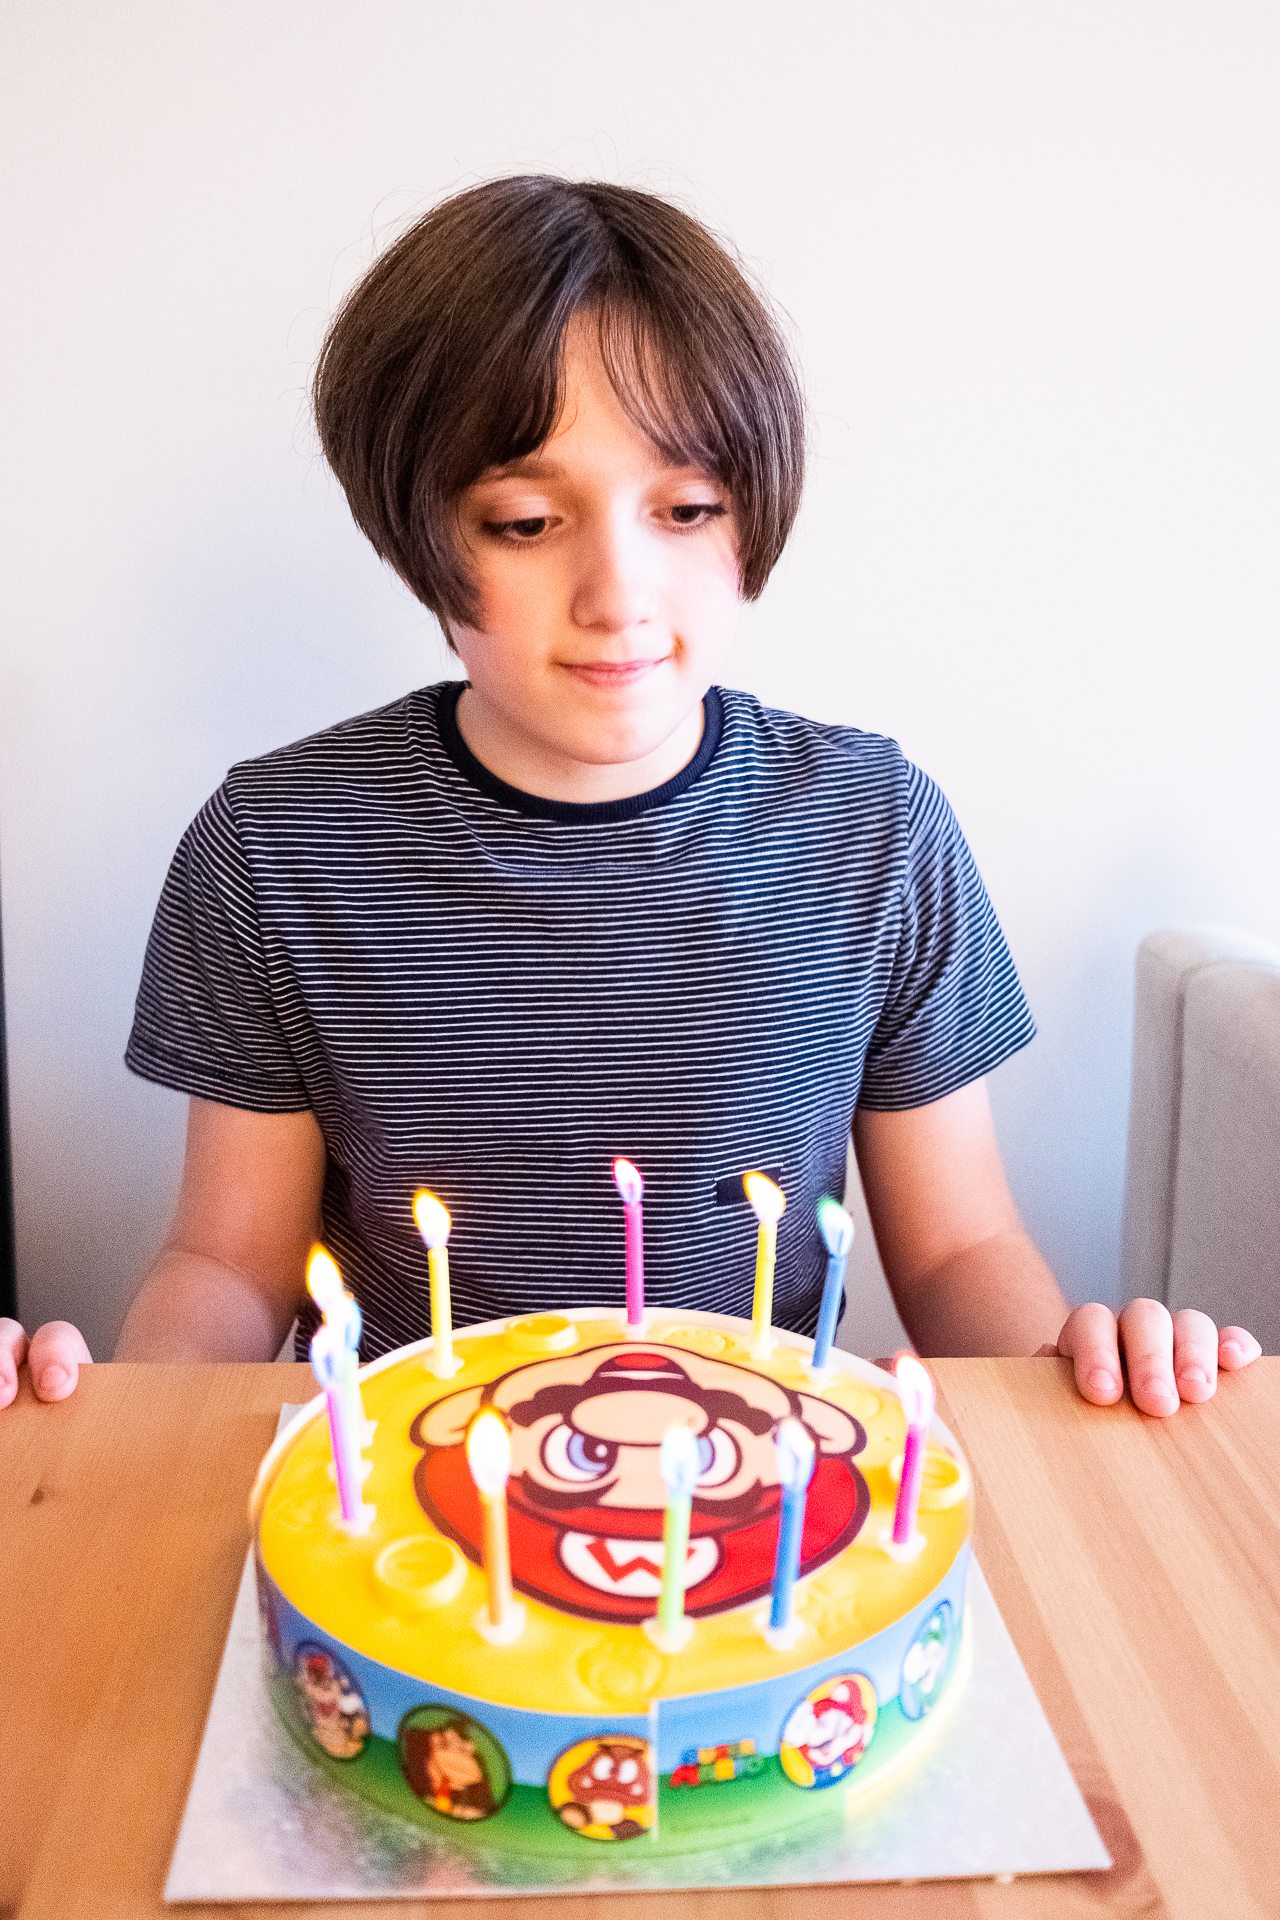 Oliver's 11th birthday